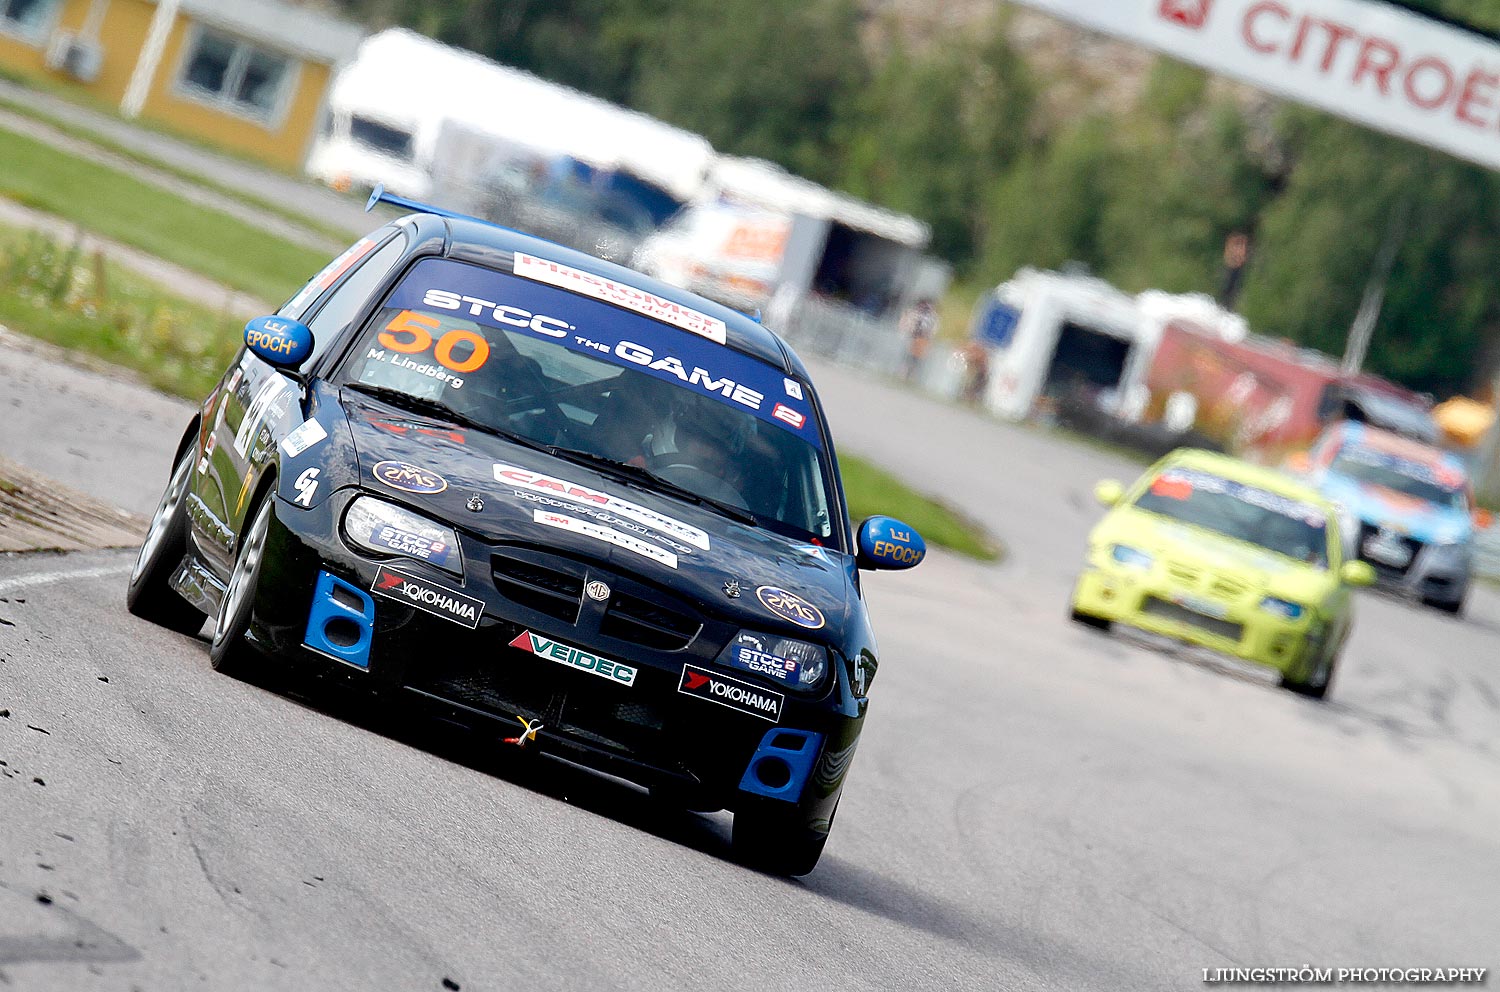 SSK Raceweek,mix,Kinnekulle Ring,Götene,Sverige,Motorsport,,2011,44492